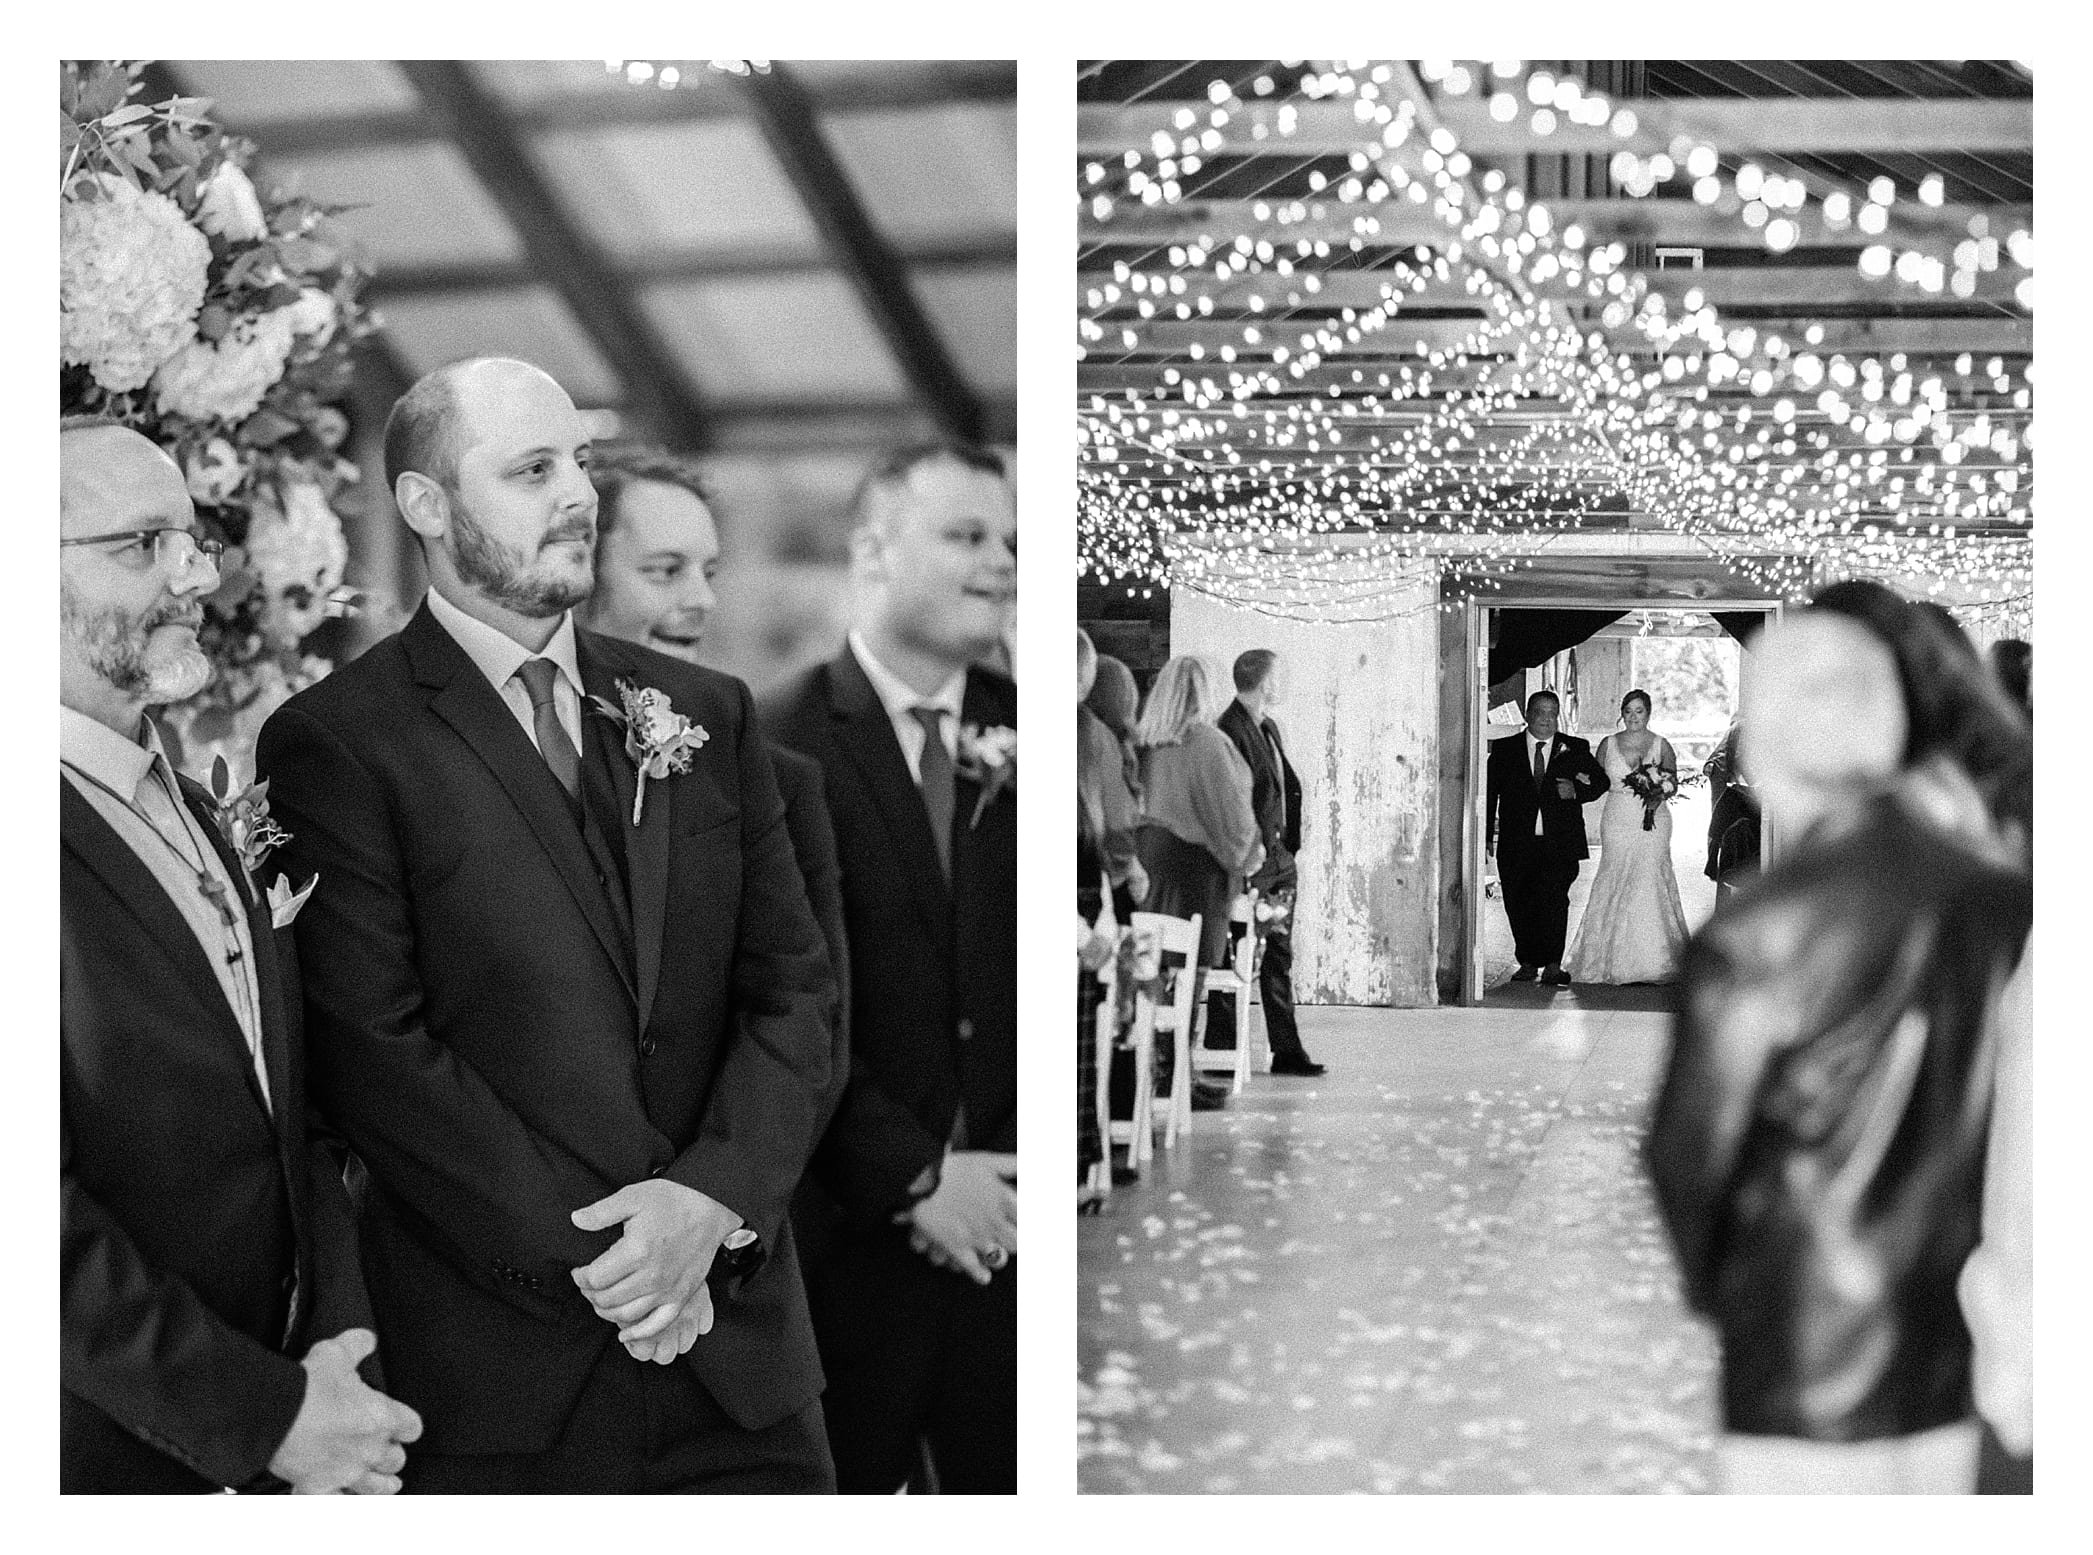 Groom Sees his bride coming down the aisle at their Heritage Prairie Farm wedding